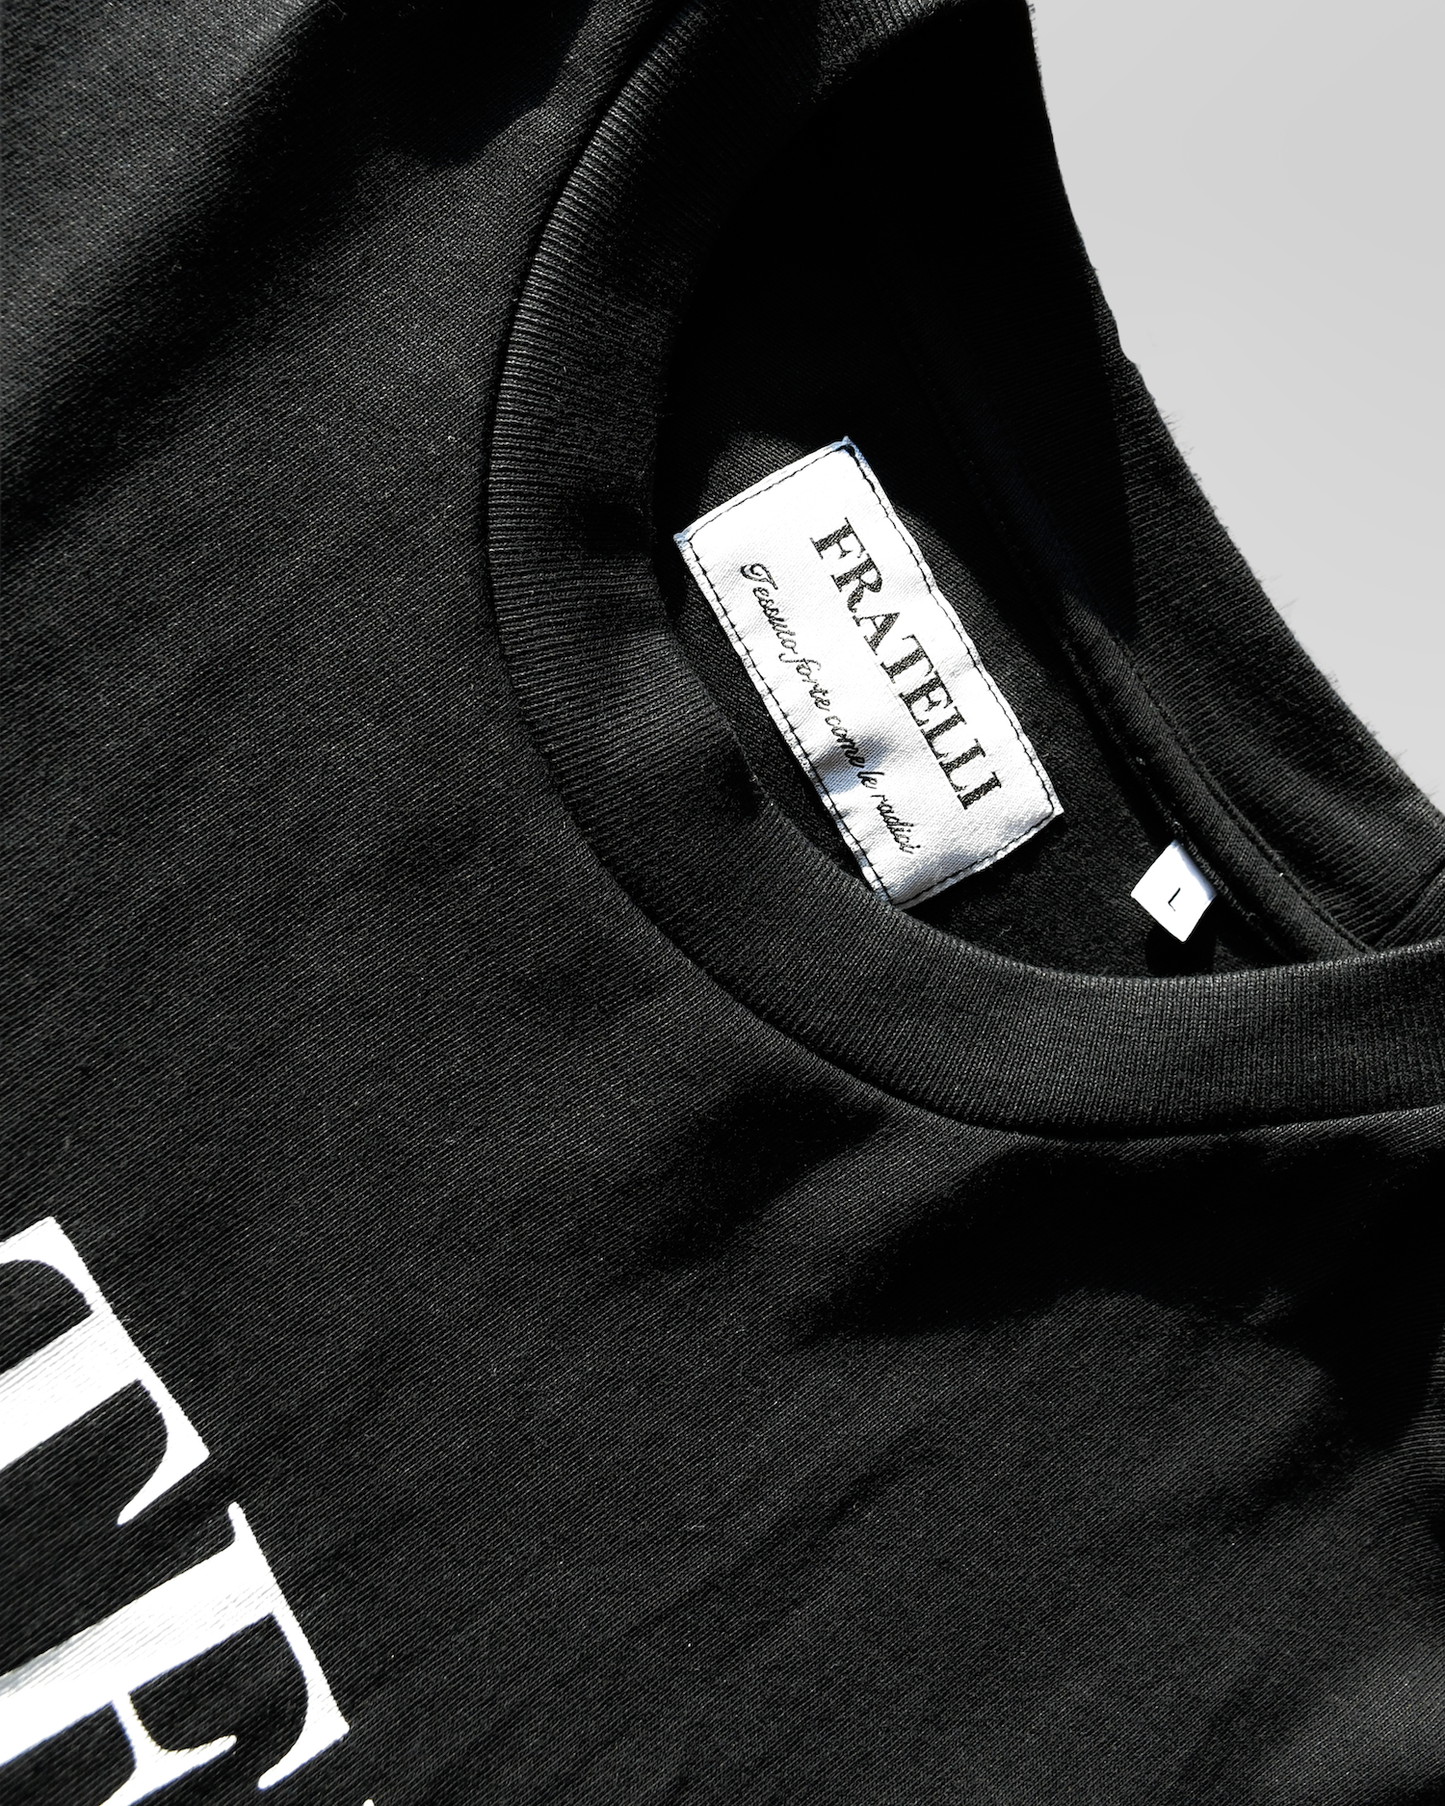 2FRATELLI Oversized front print T-Shirt black (unisex) - 2FRATELLI